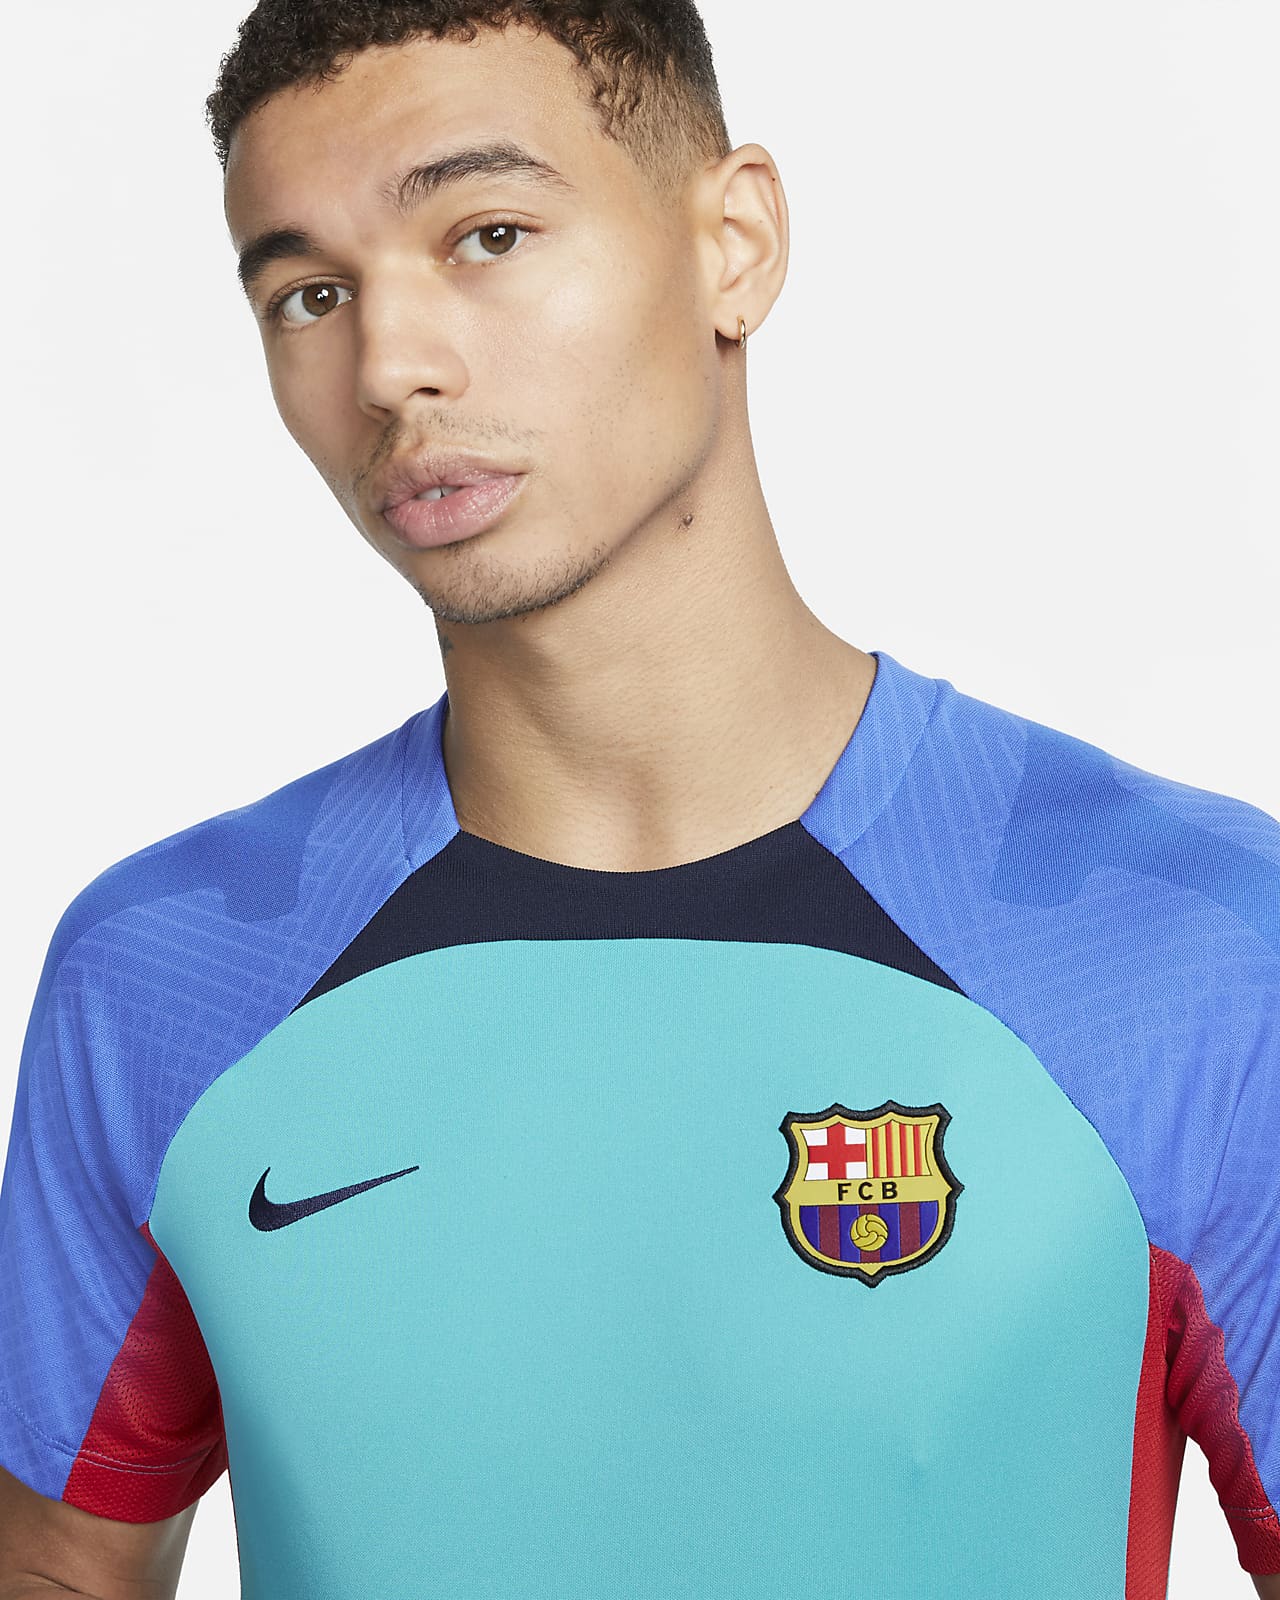 Verloren hart vrijheid sirene F.C. Barcelona Strike Men's Nike Dri-FIT Short-Sleeve Football Top. Nike LU